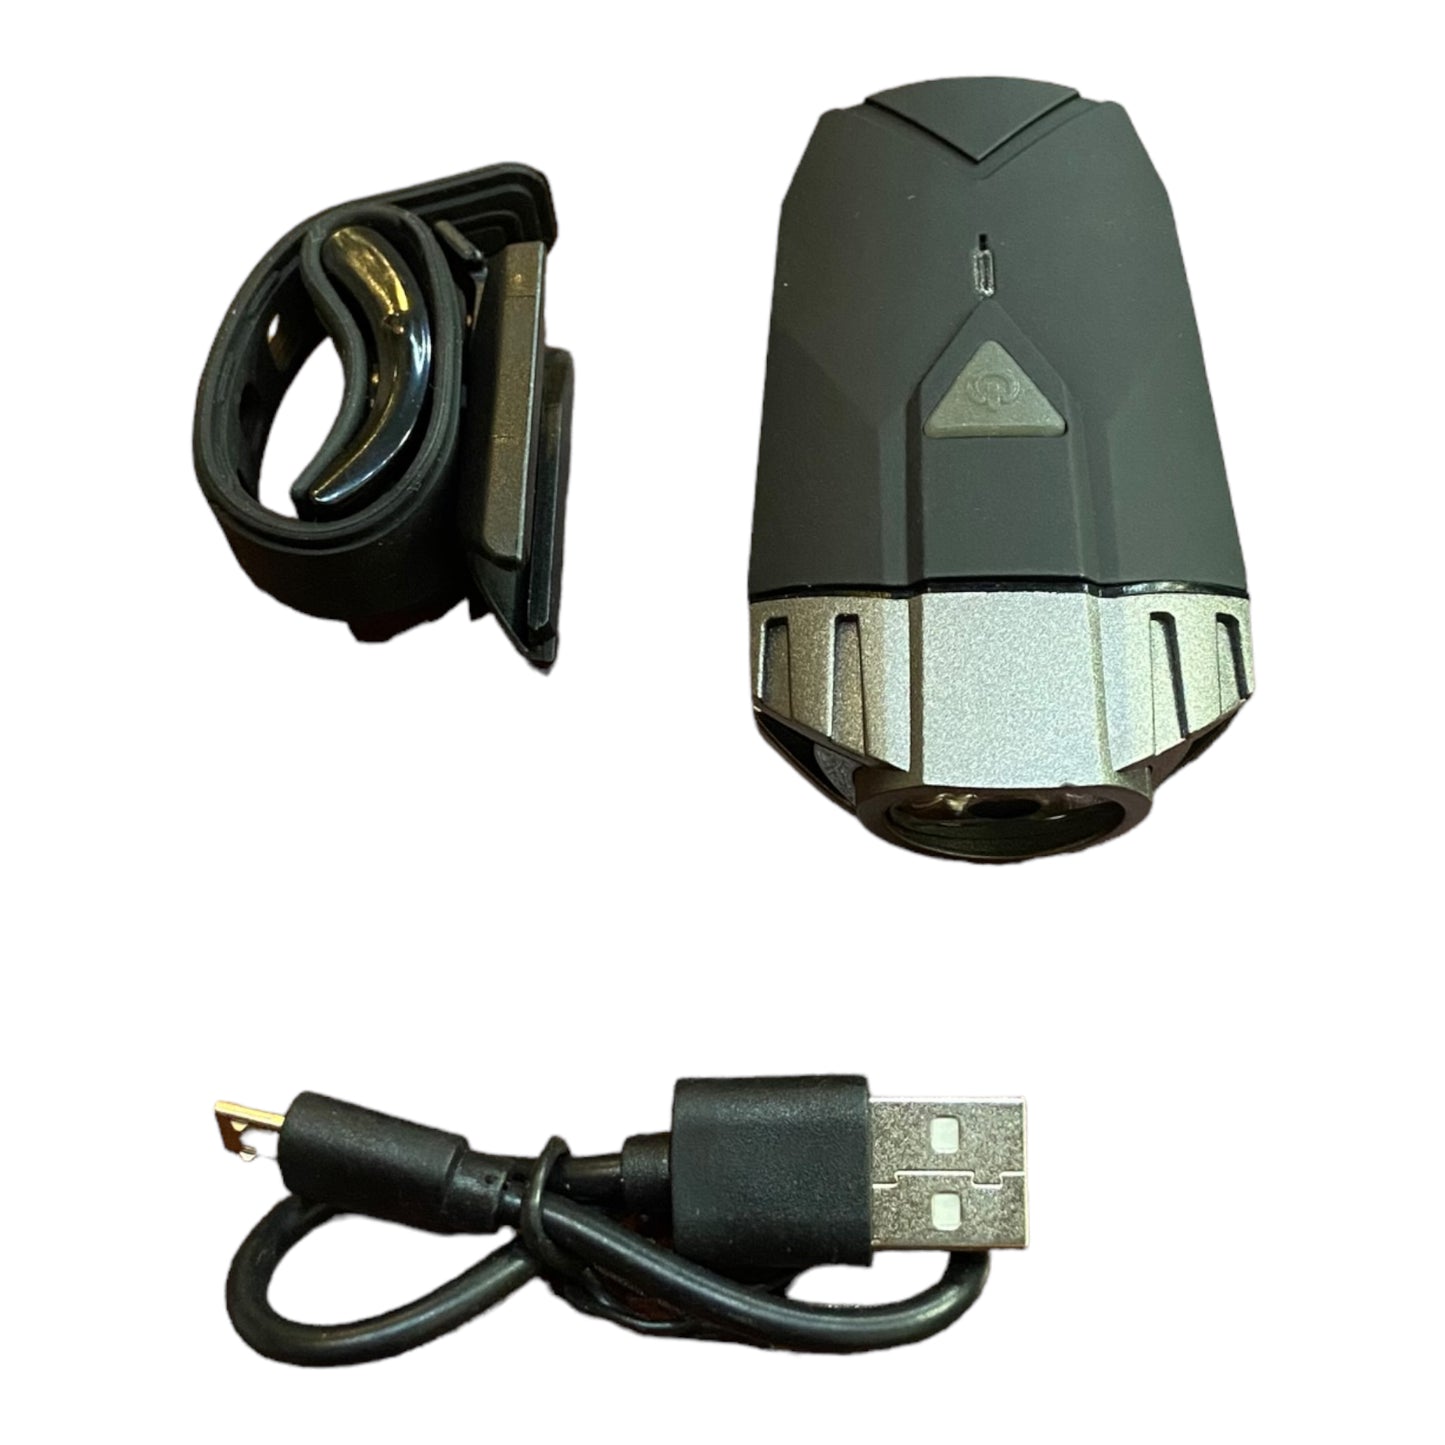 USB RECHARGABLE LED BIKE HEAD LIGHT